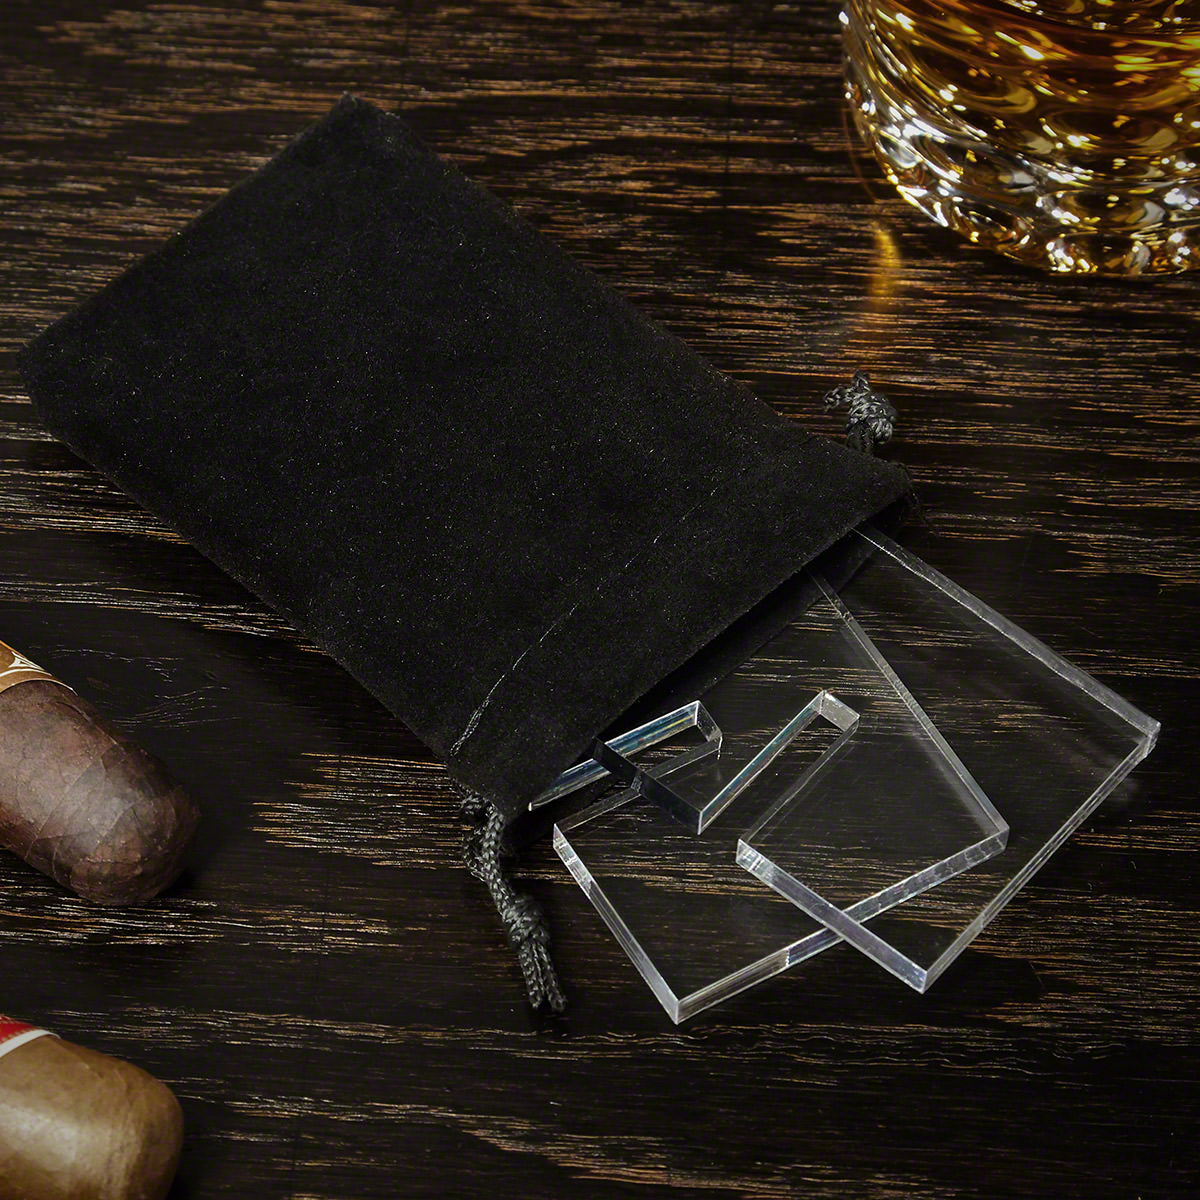 Engraved Cigar Box Set with Buckman Glasses